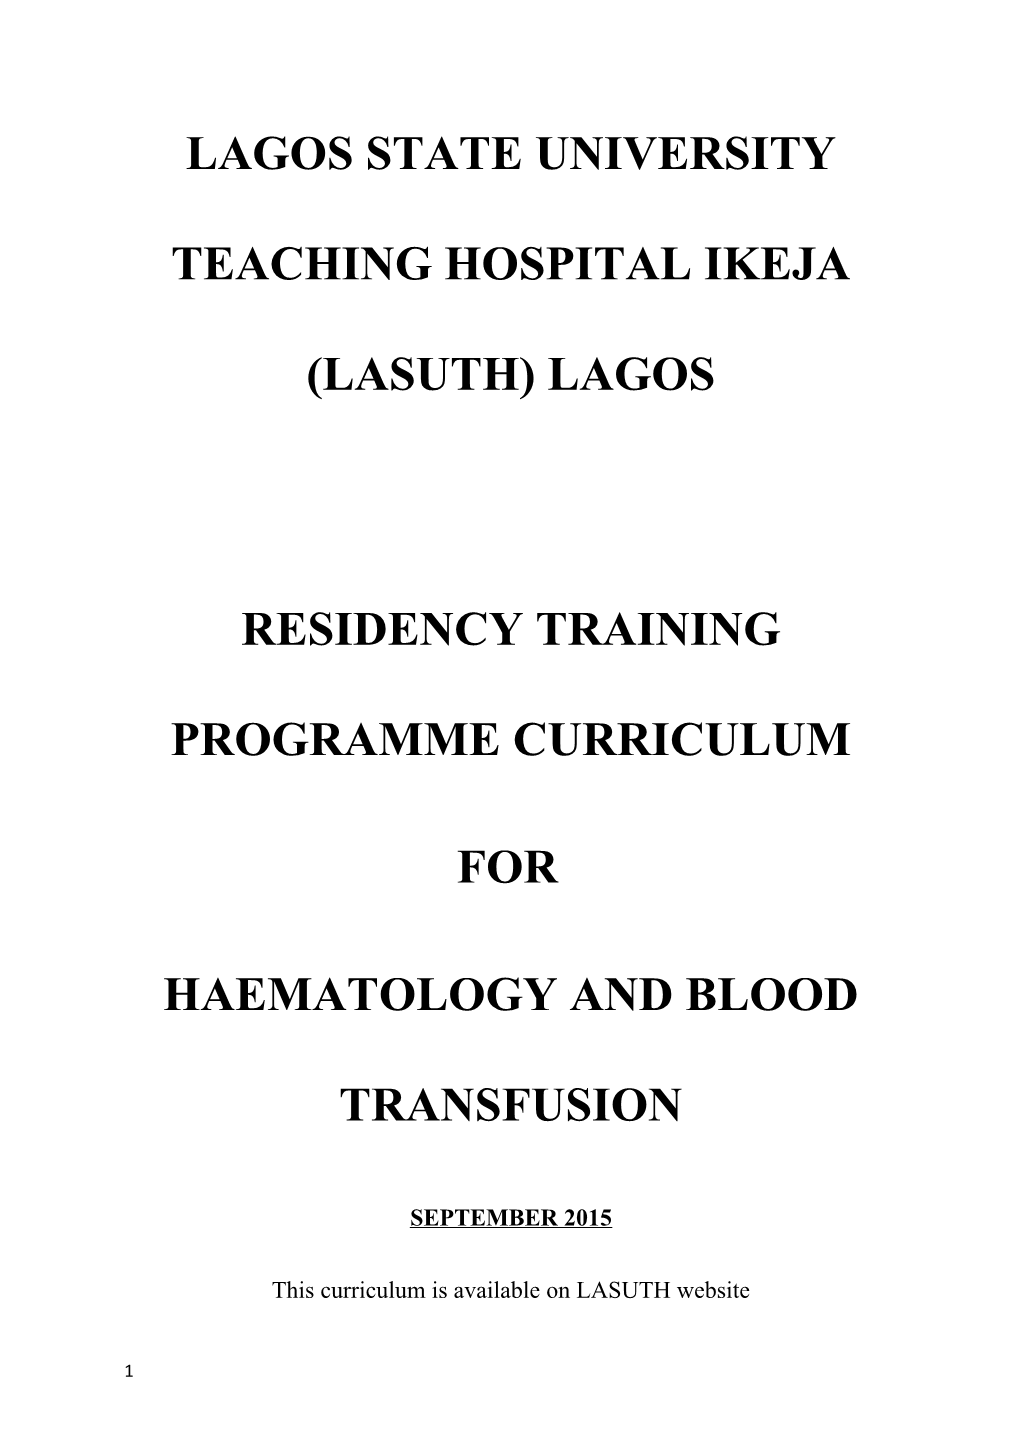 Lagos State University Teaching Hospital Ikeja (Lasuth)Lagos